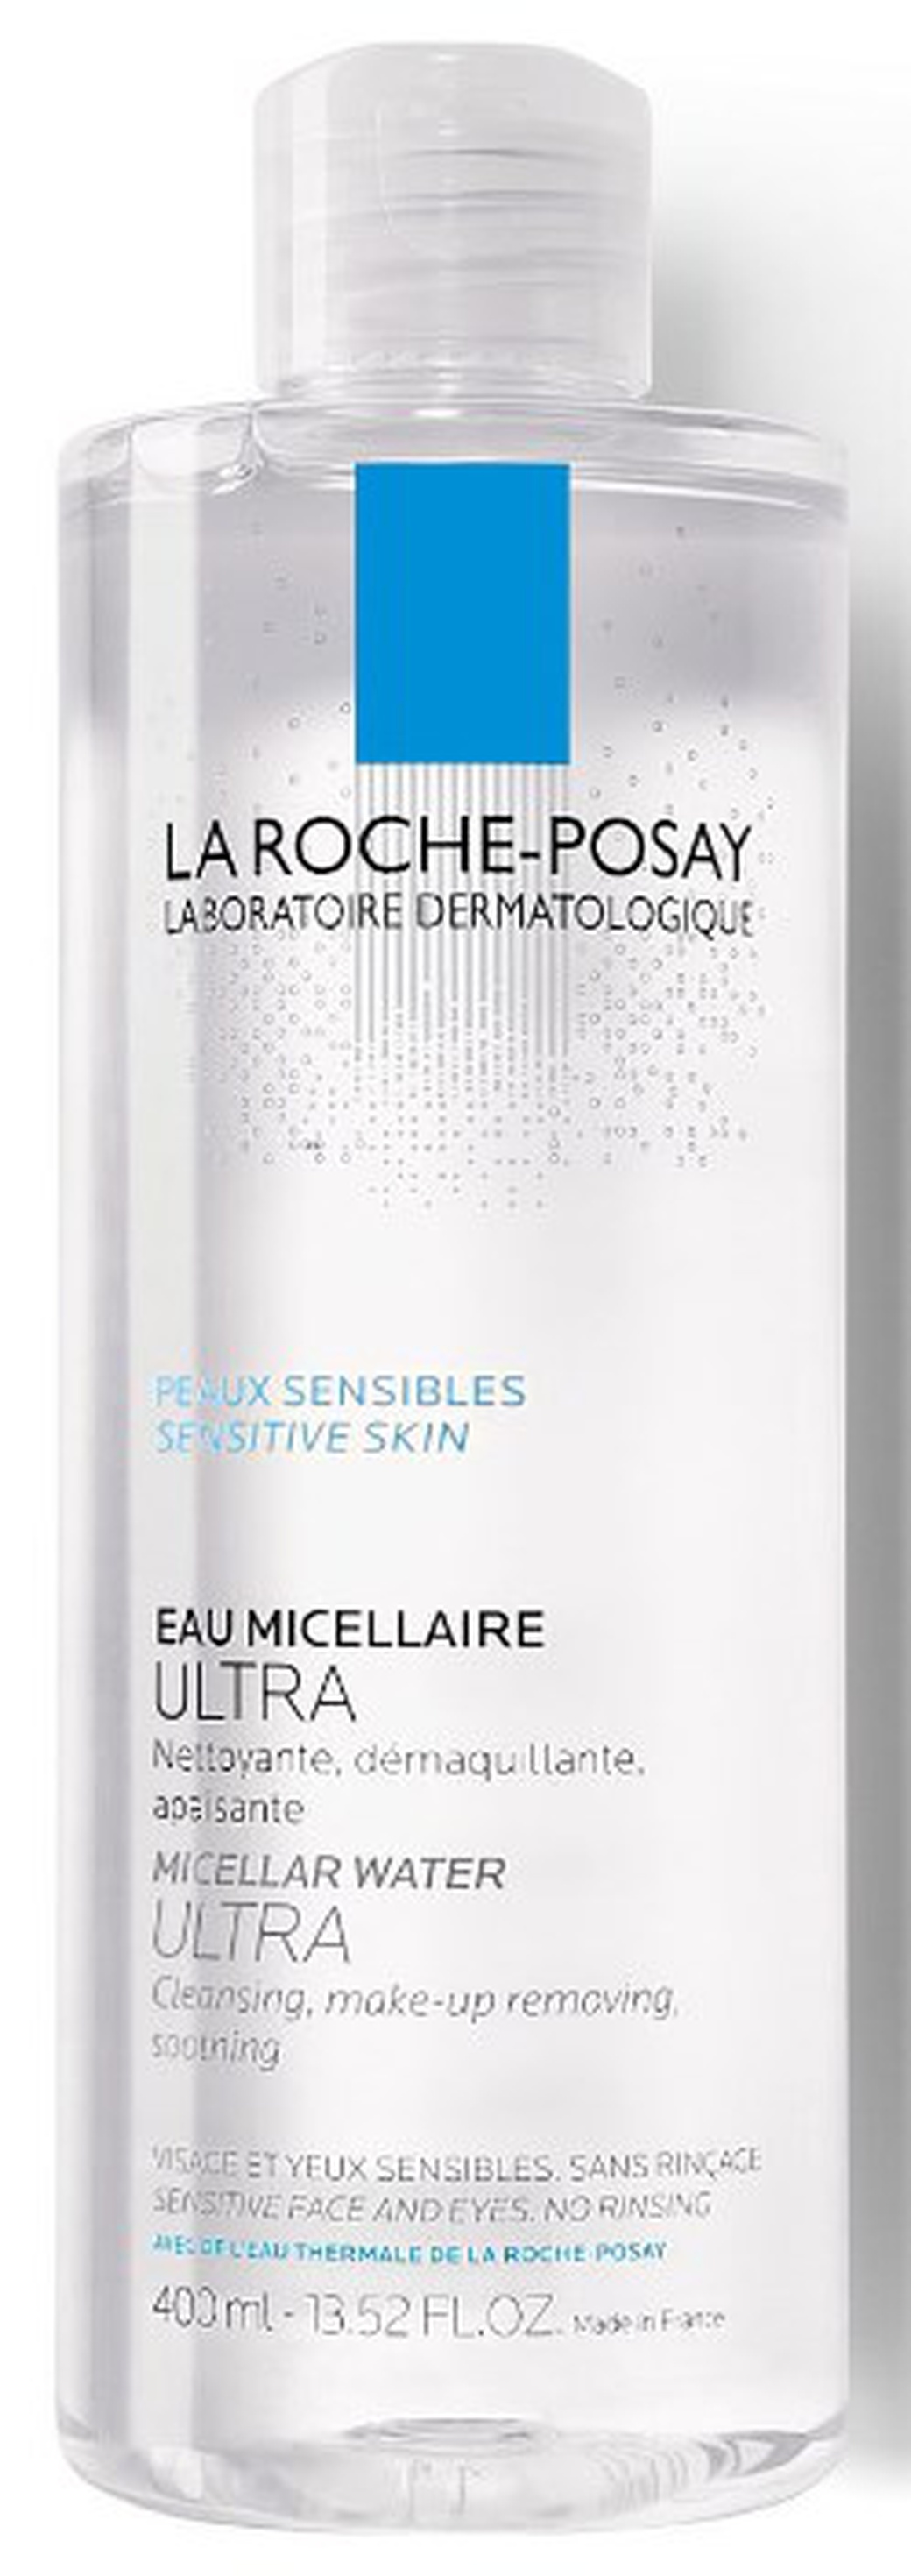 La Roche-Posay Physiological мицелярная вода ultra для чувствительной кожи 400мл фото